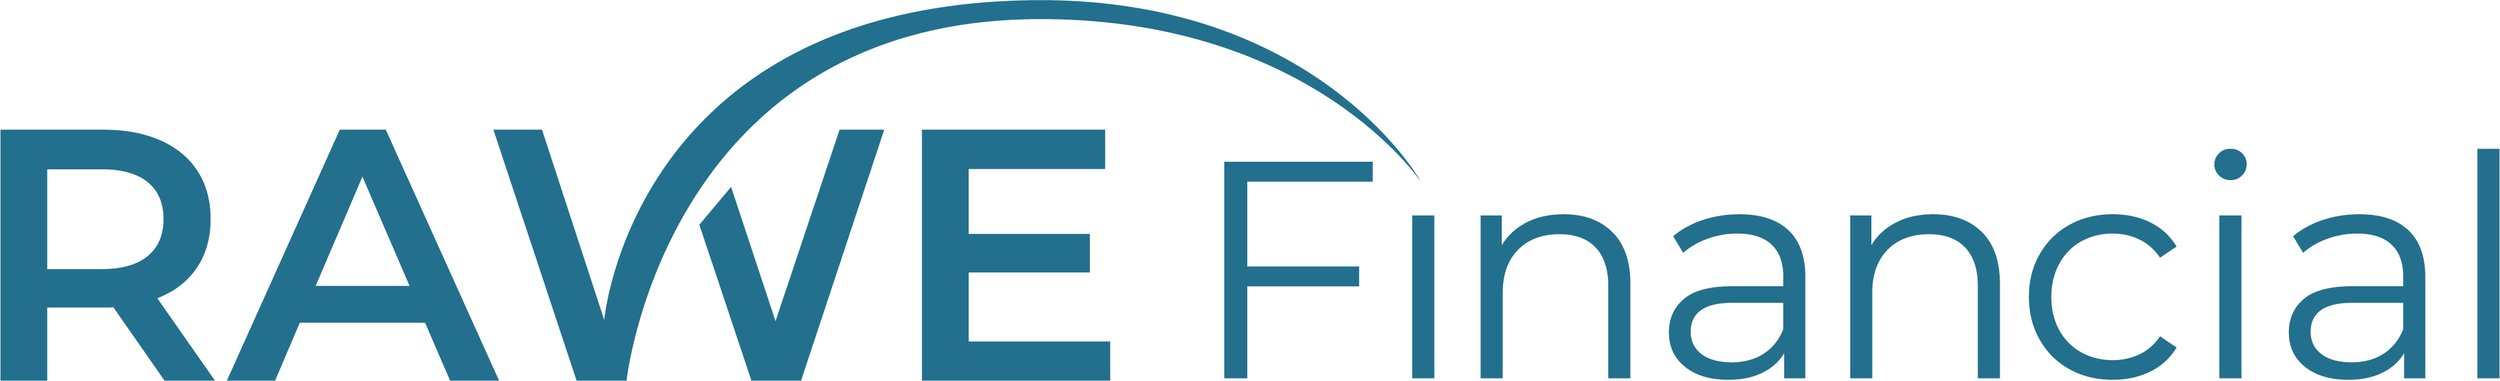 Rawe Financial Logo.jpg